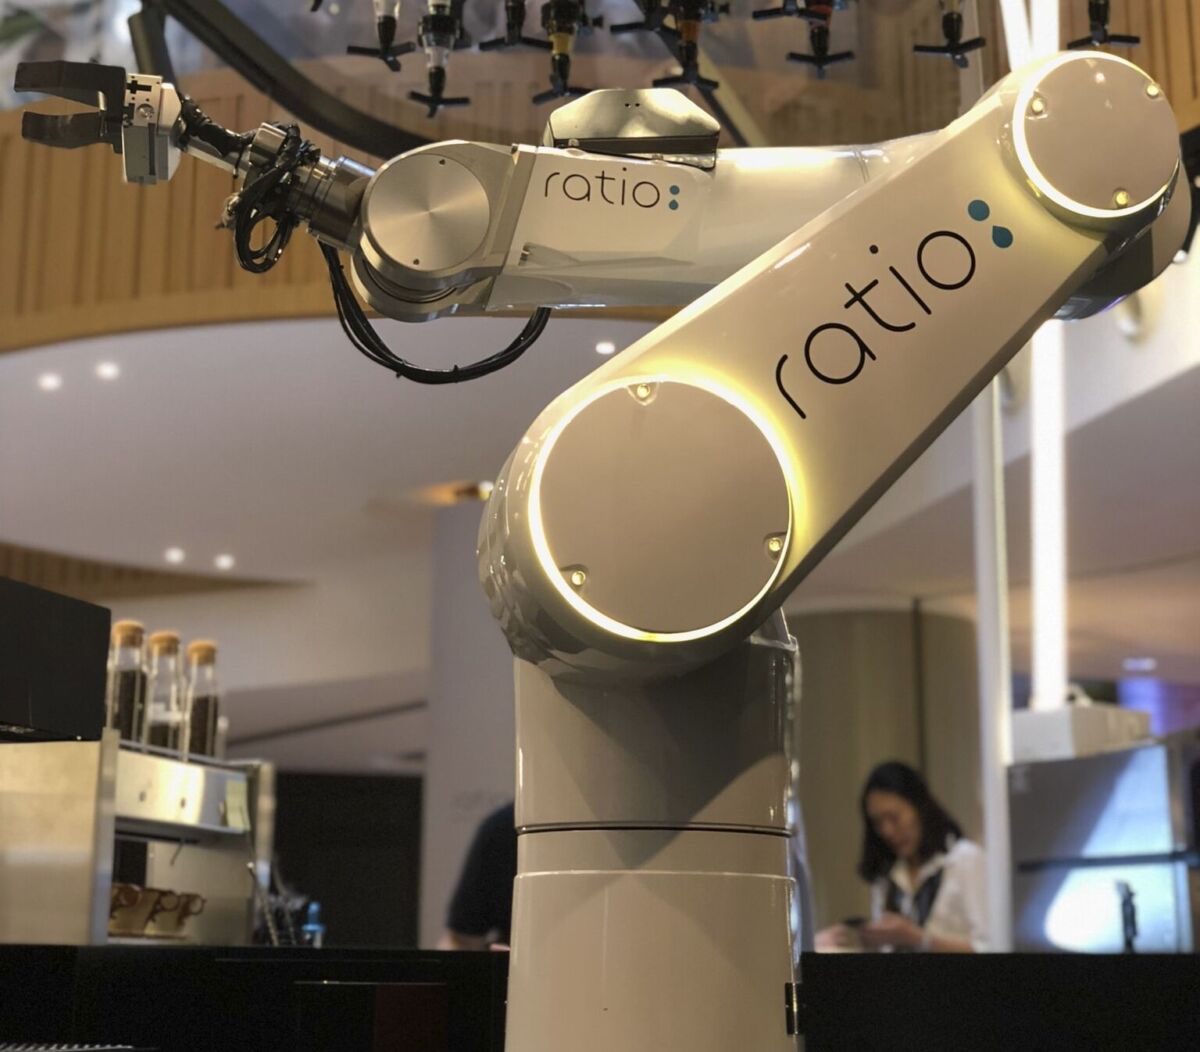 ratio a robotic barista serves coffee